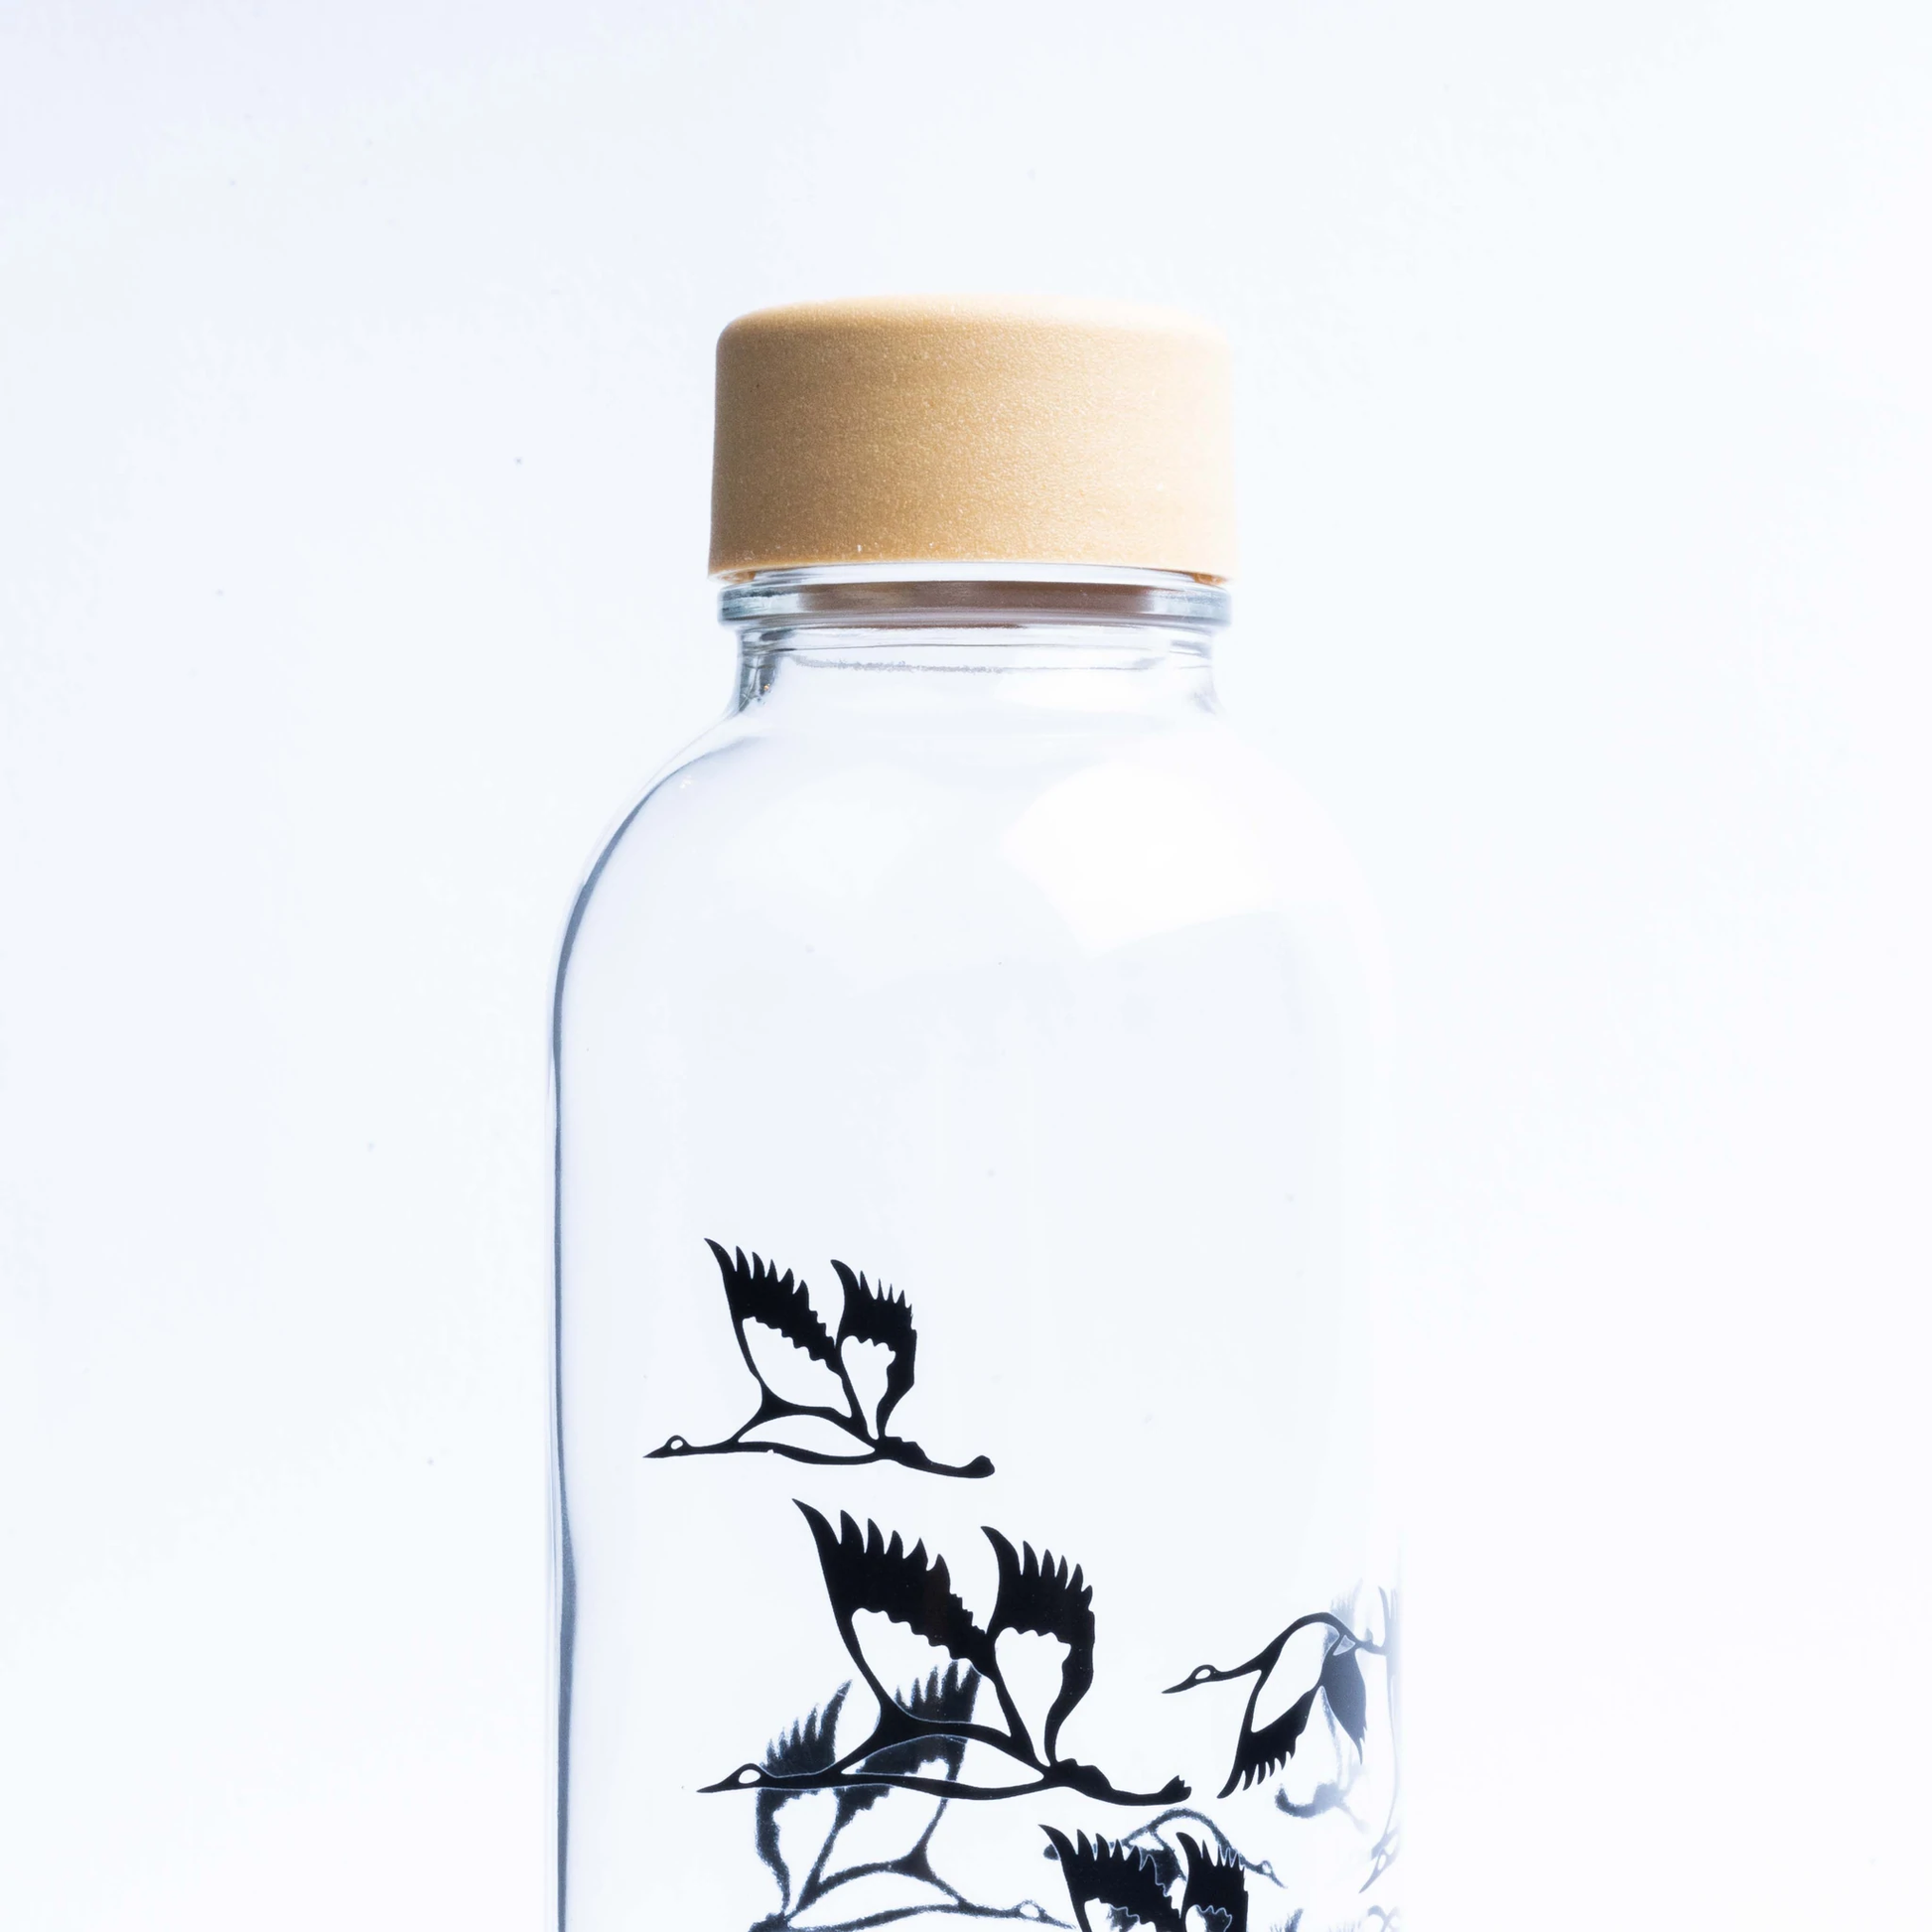 Trinkflasche aus Glas 0,7 l div. Designs | CARRY Bottles